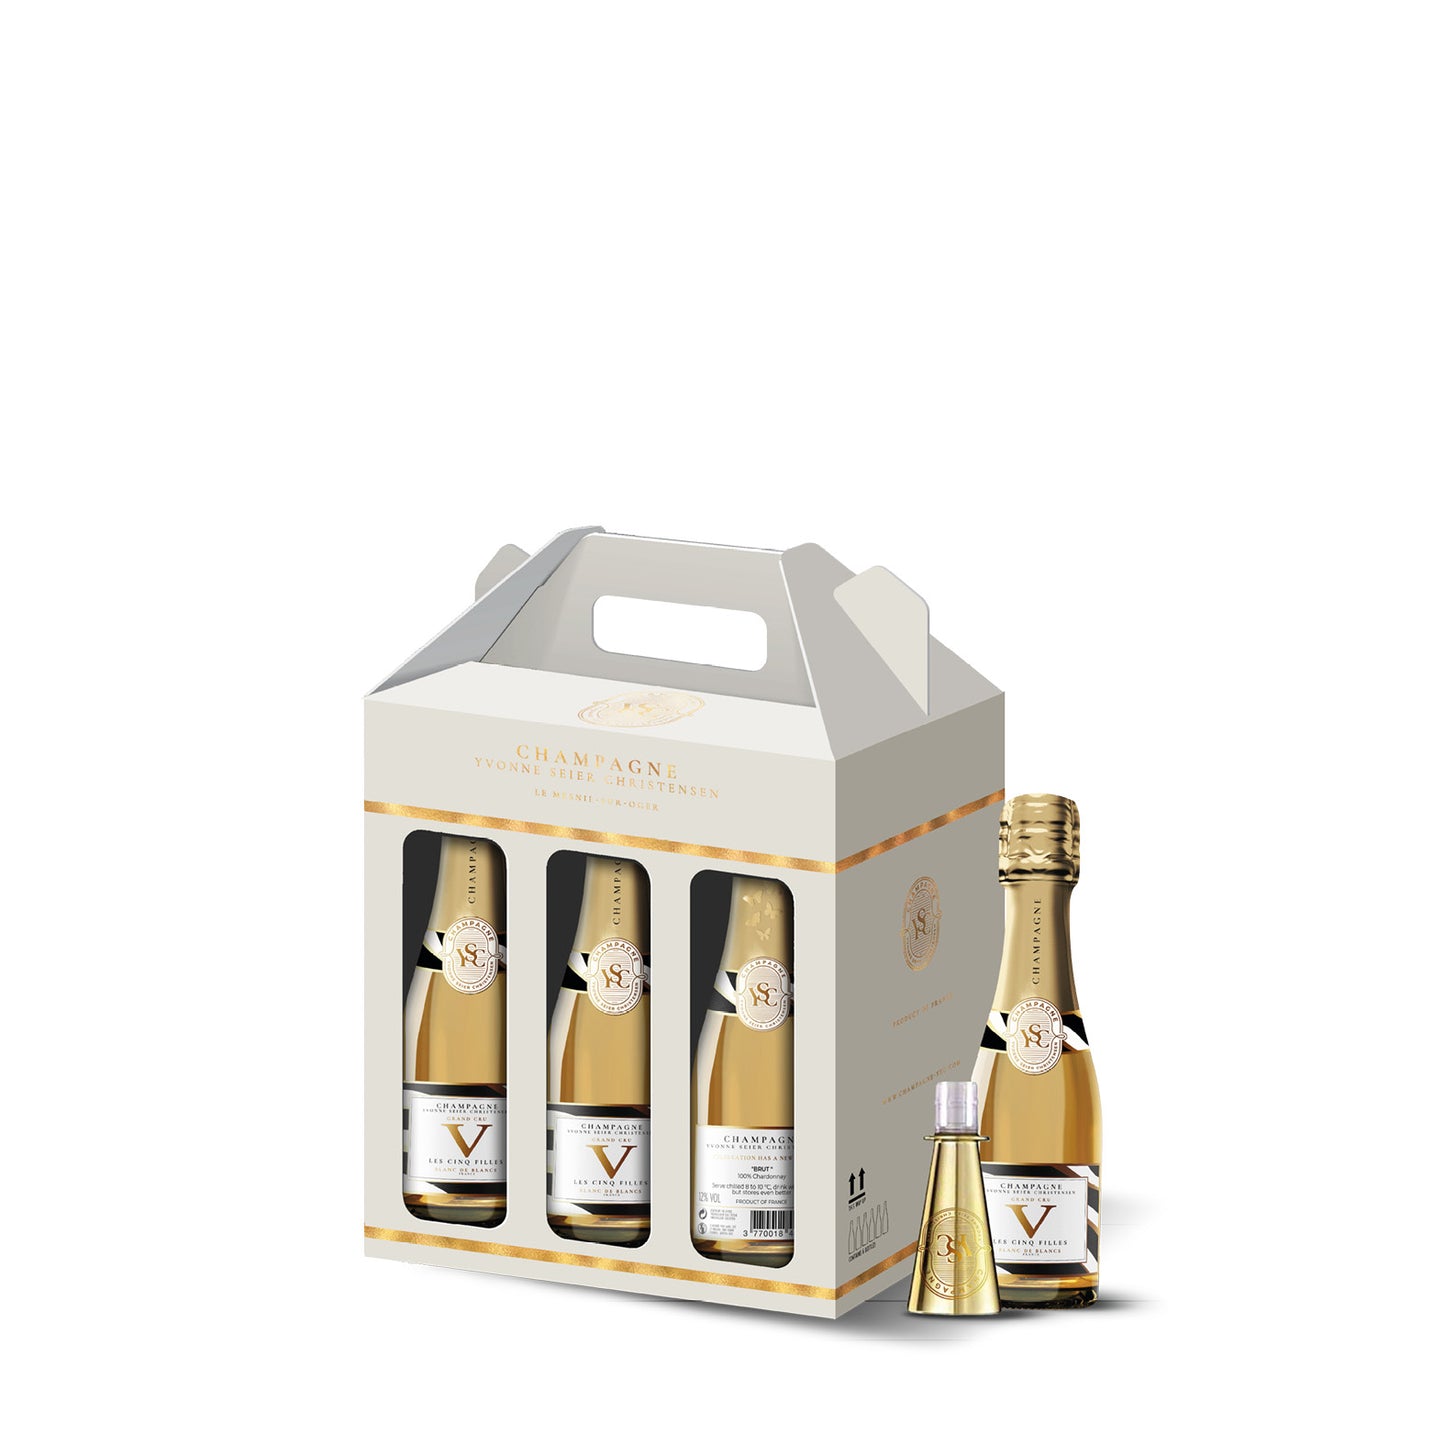 Les Cinq Champagne – YSC all Filles